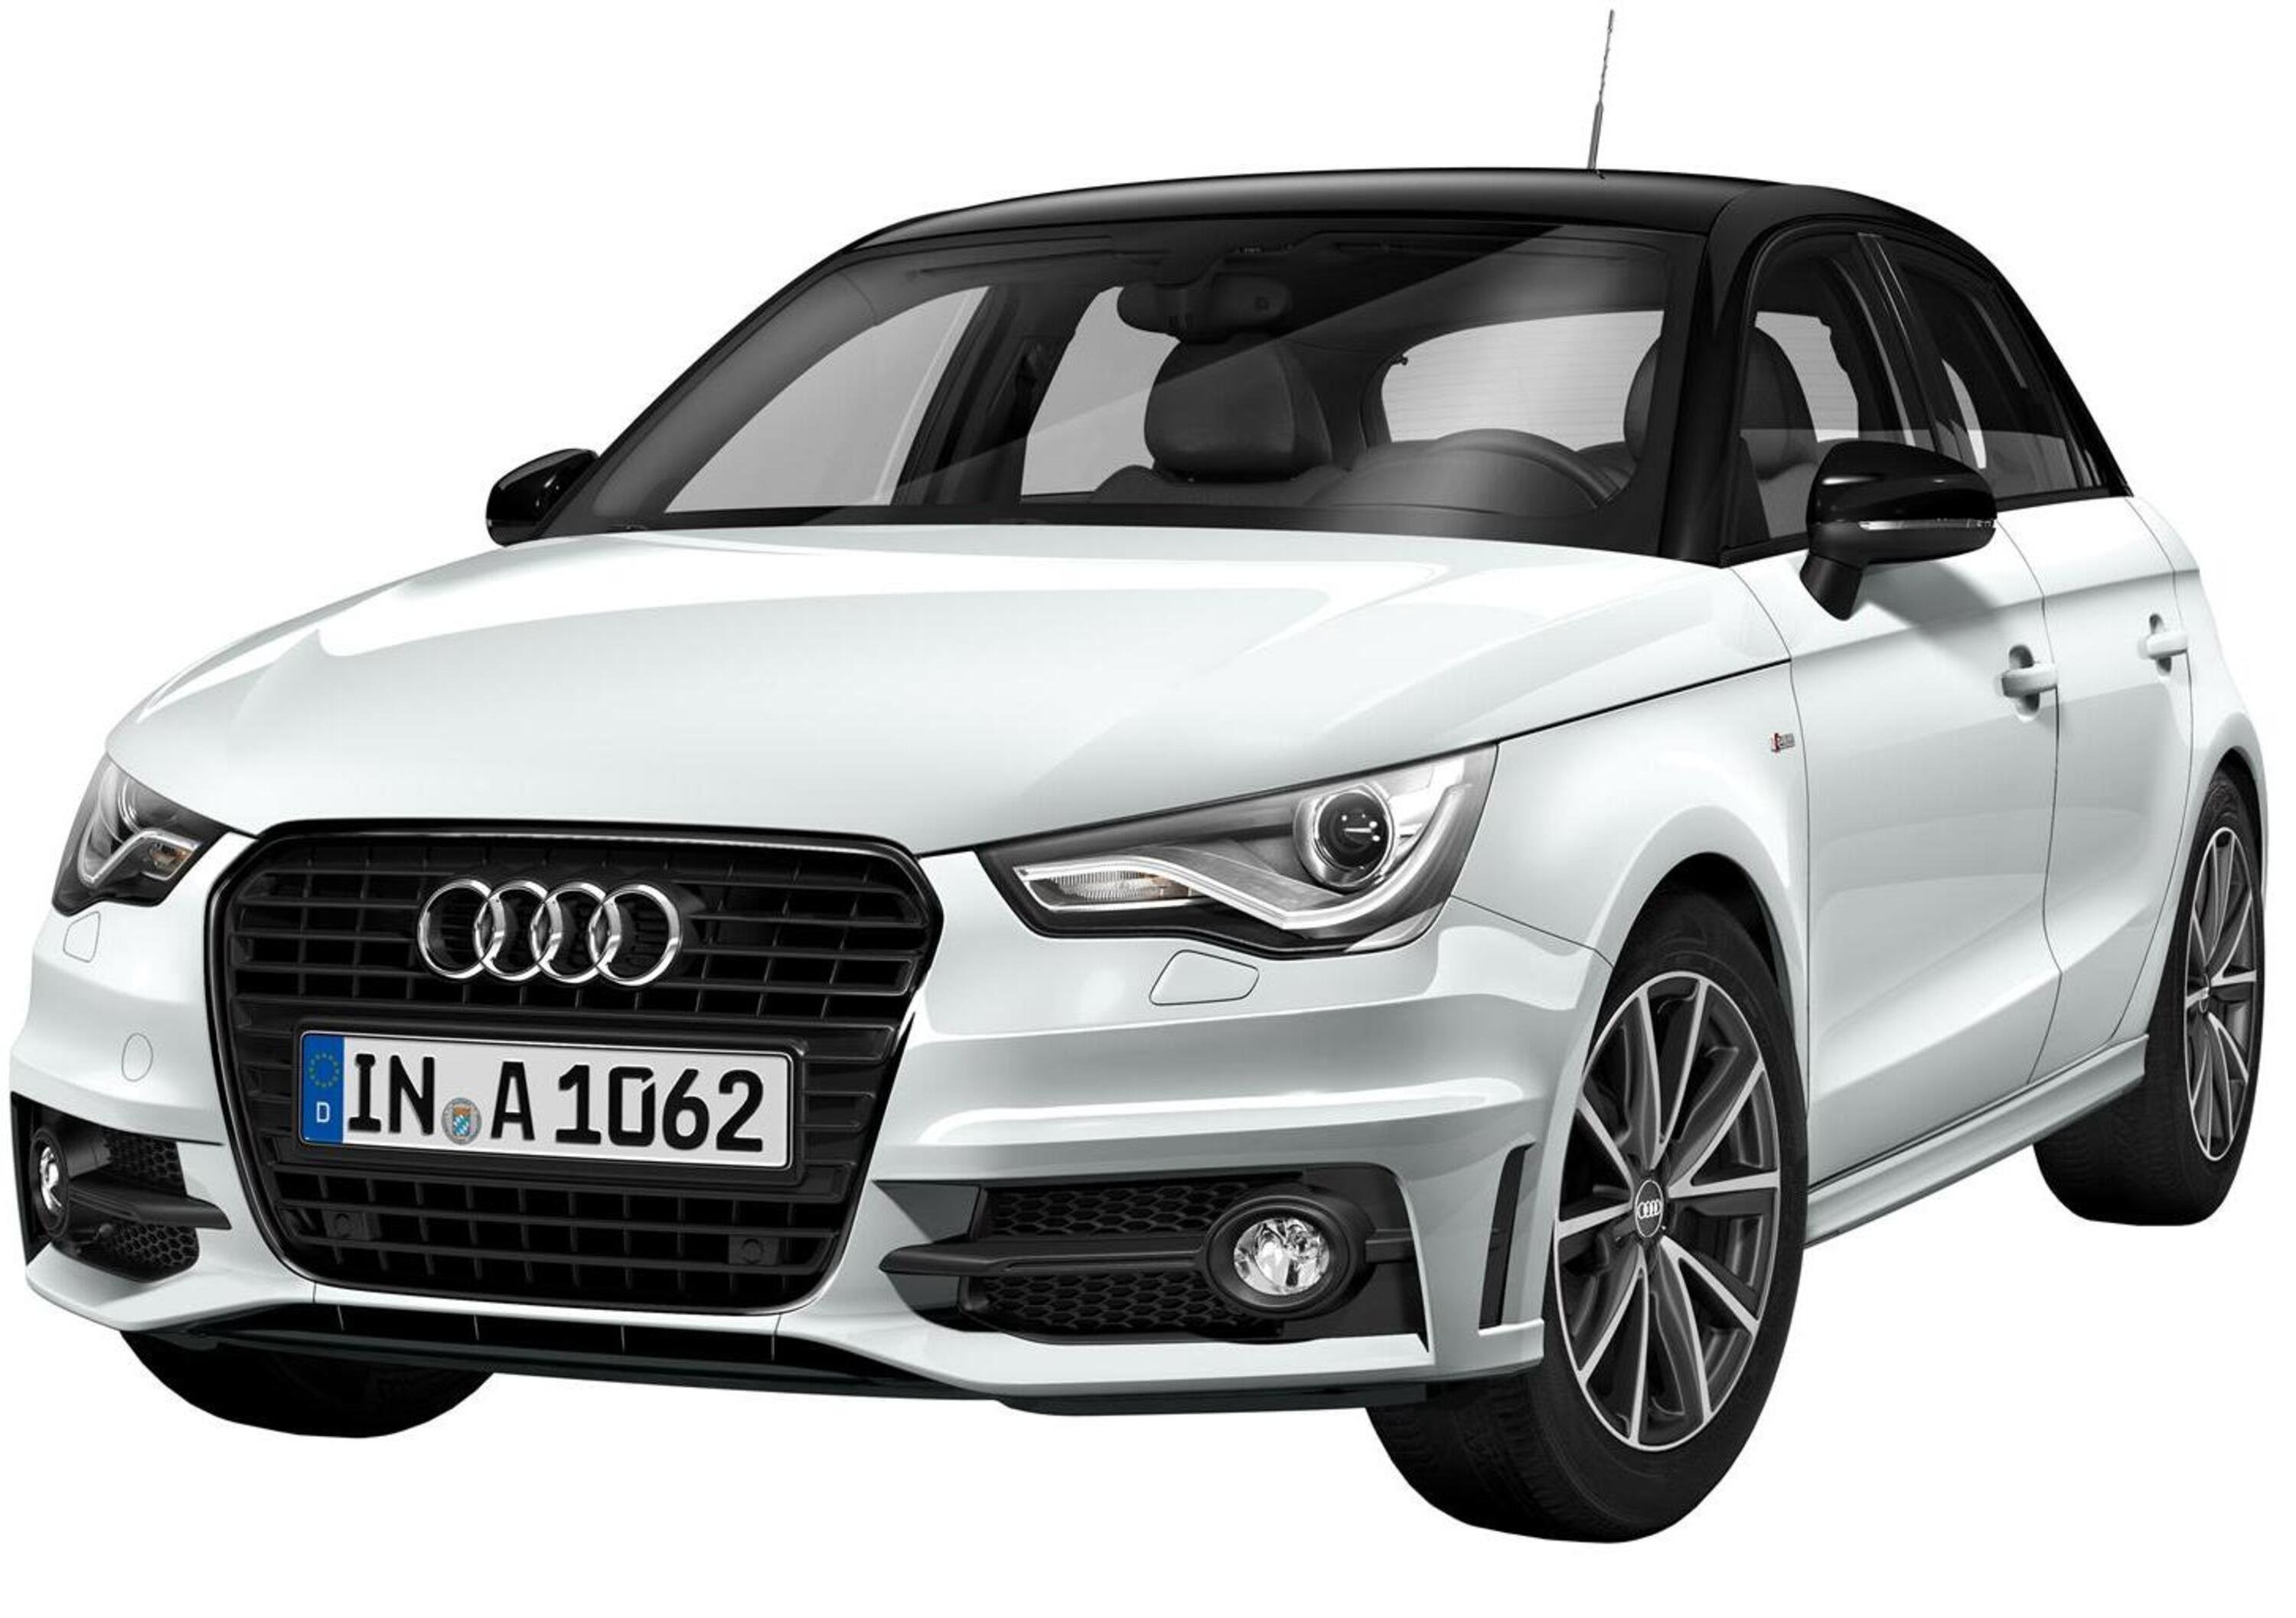 Audi A1 Admired - News 